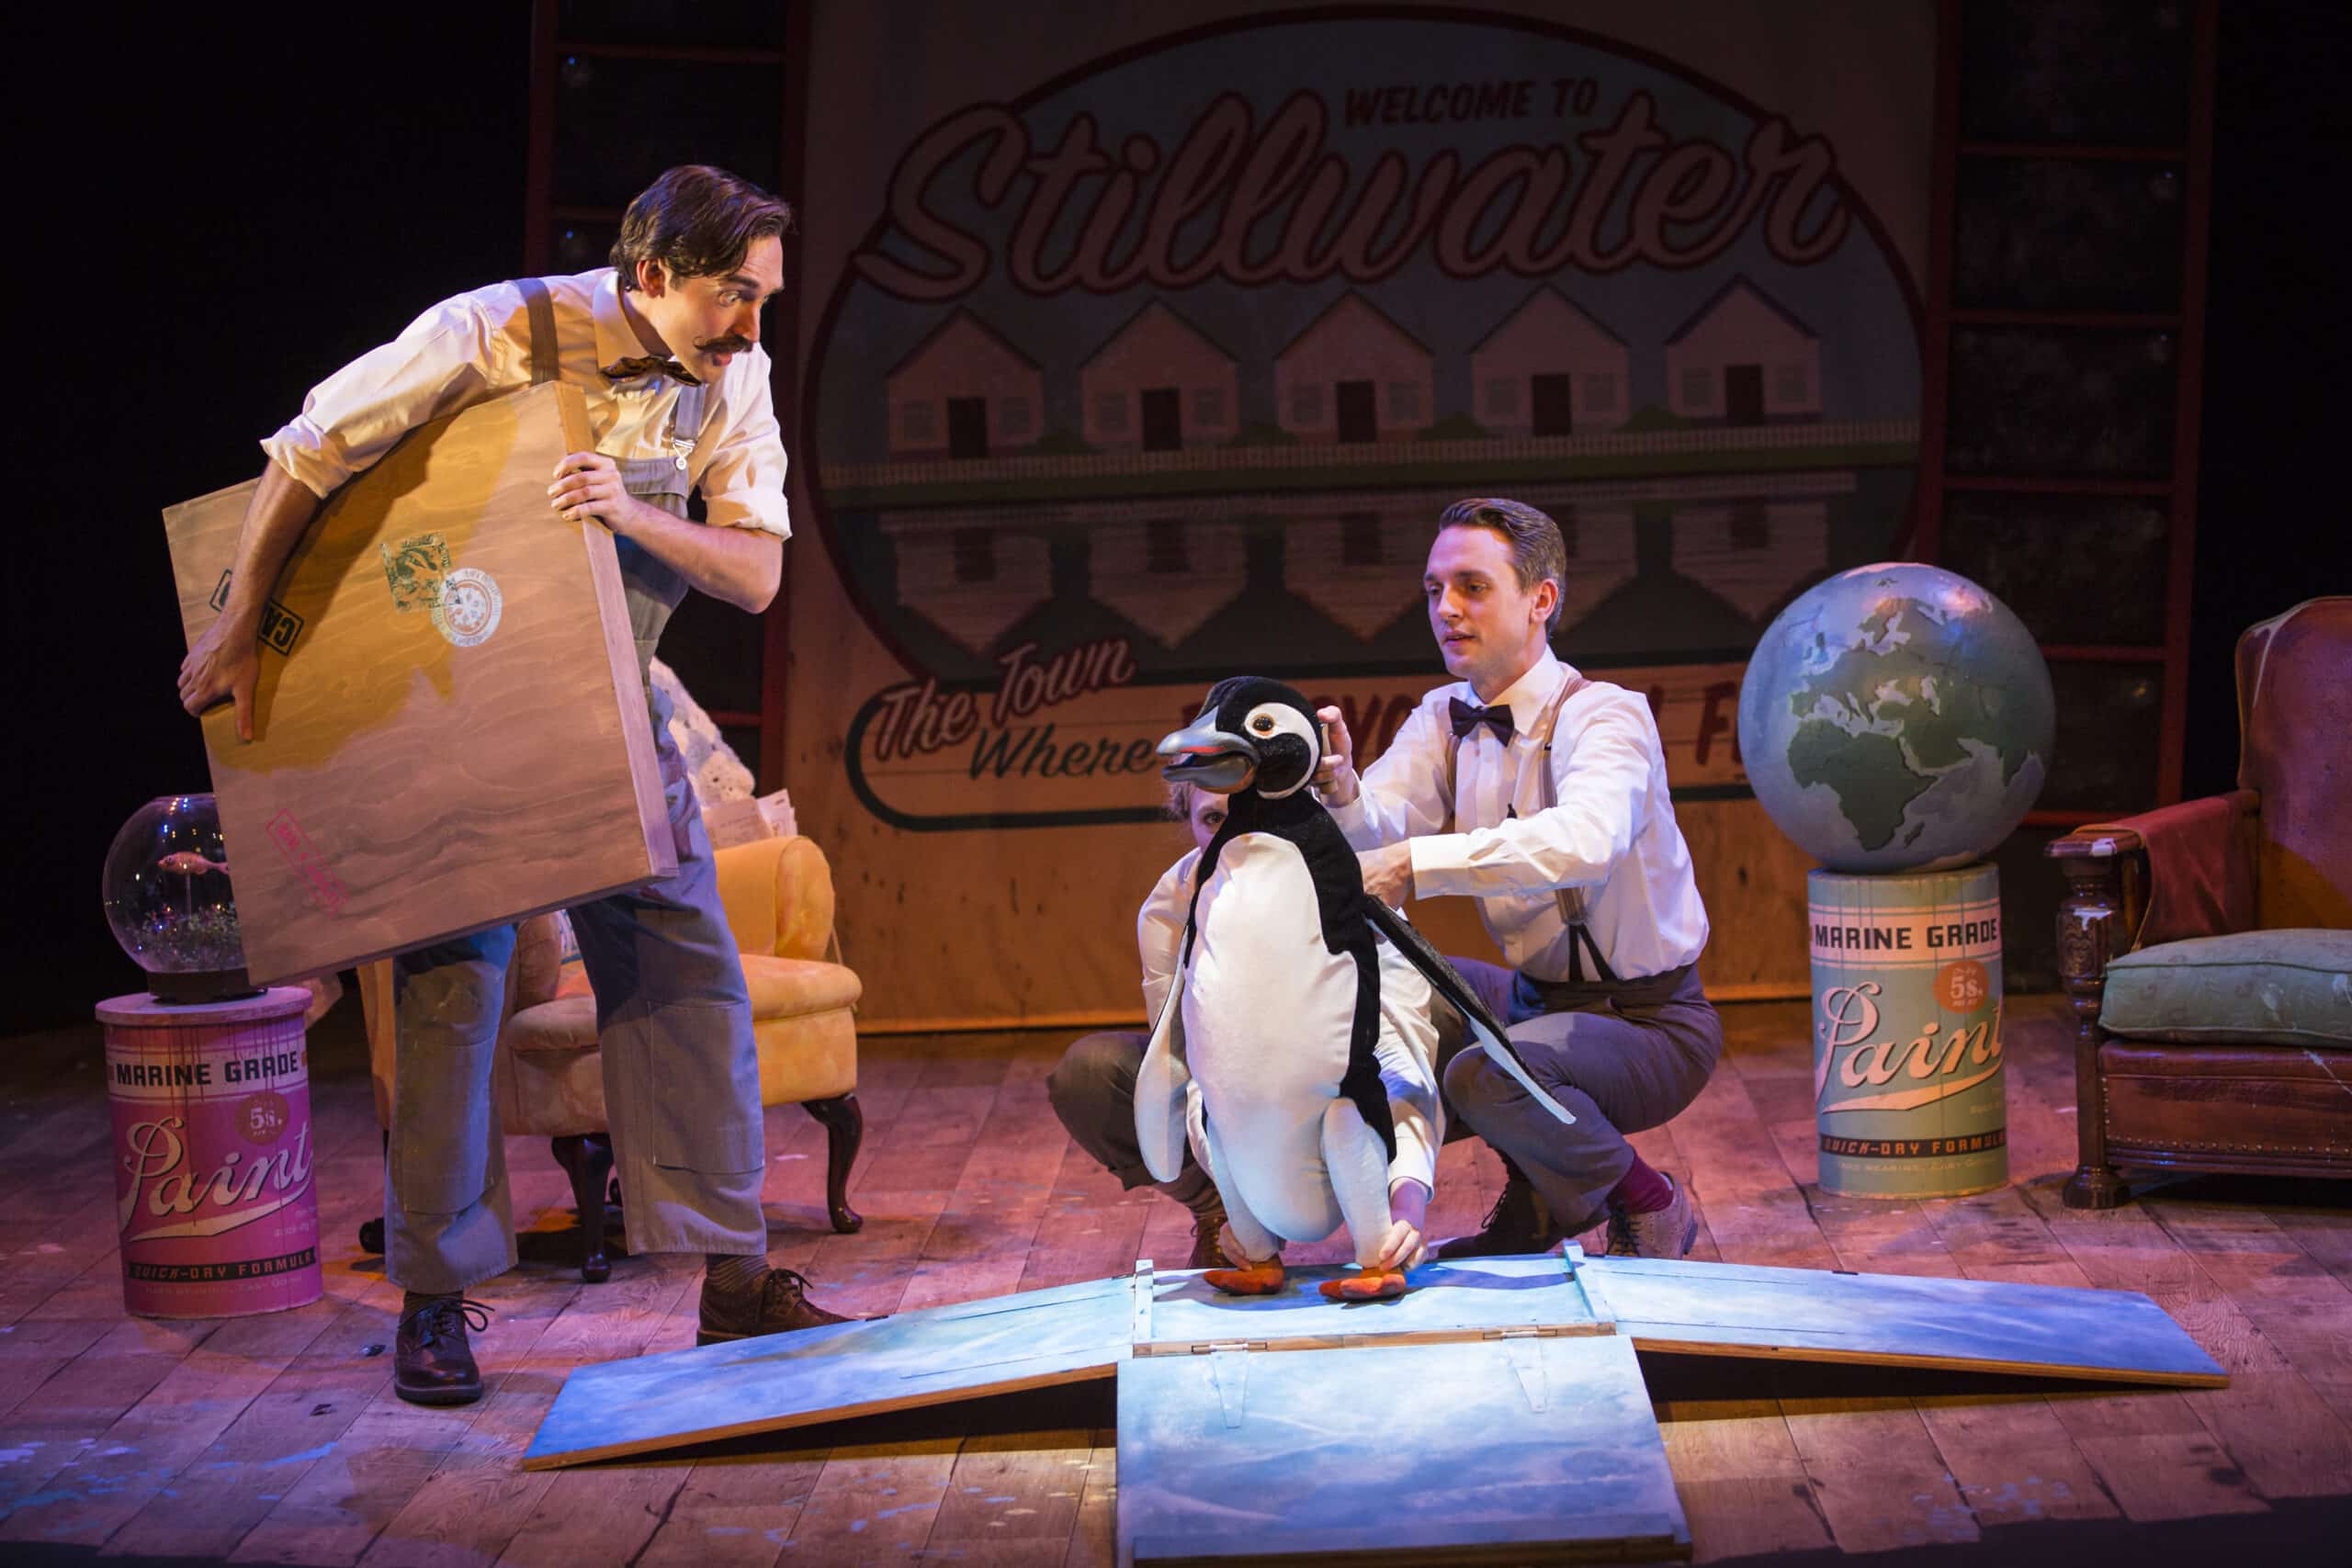 Mr Popper's Penguins cast, mid-performance